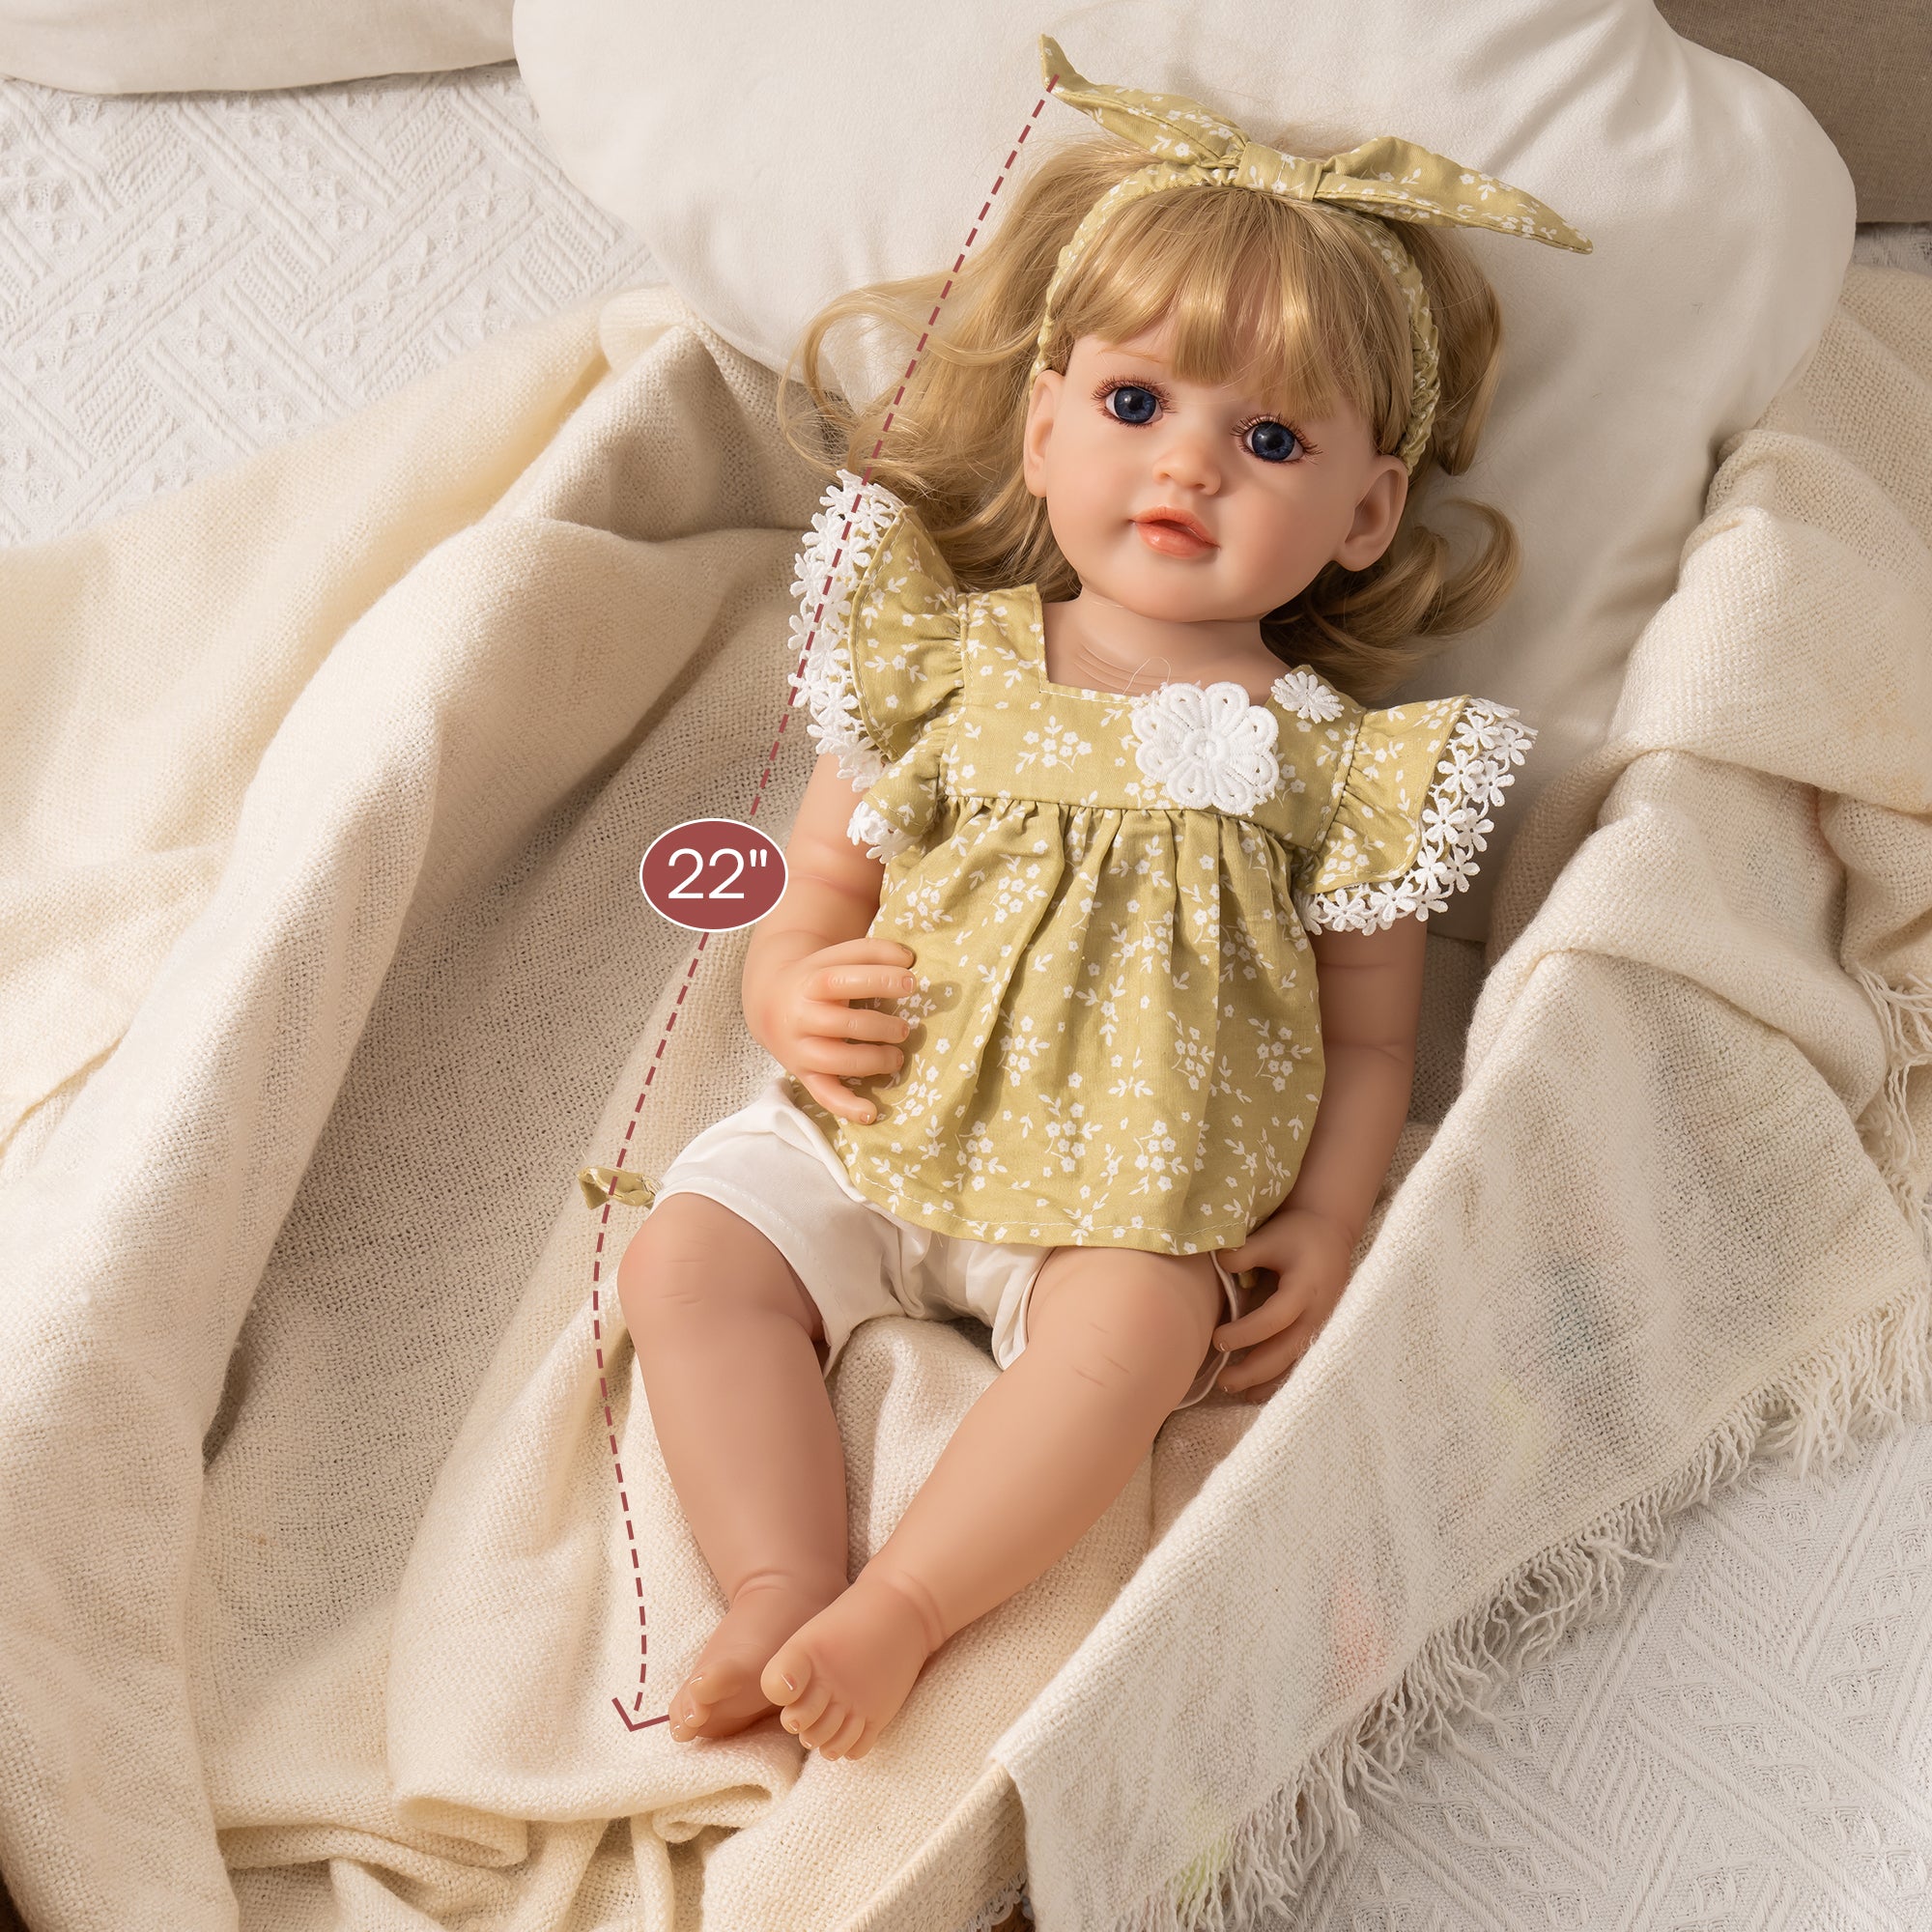 Realistic Reborn Baby Dolls,Handmade Real Life